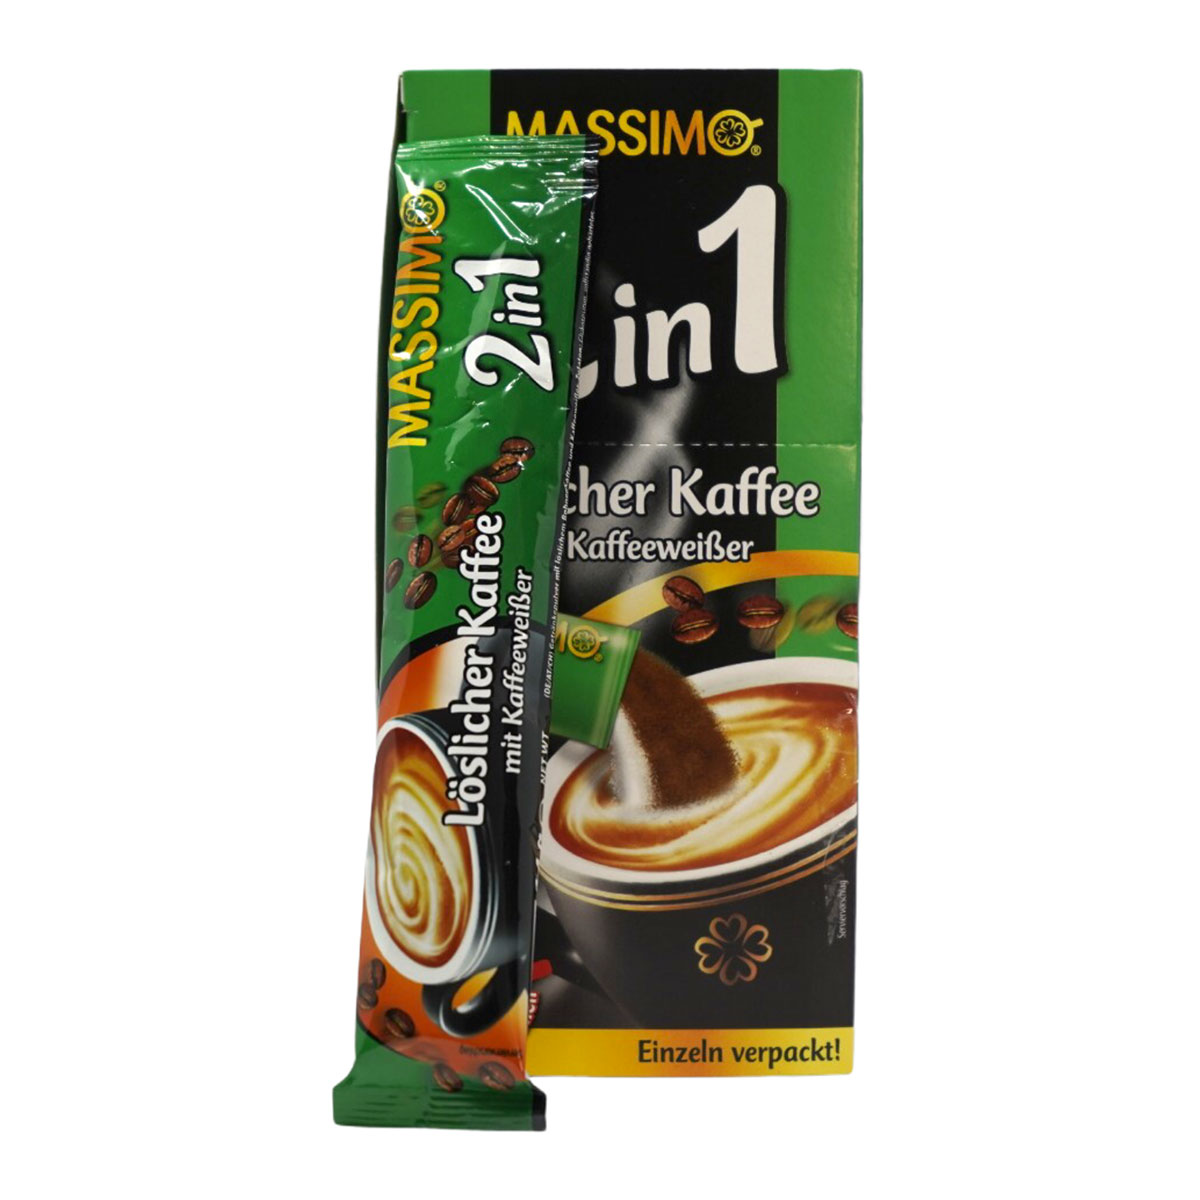 2in1 Kaffee Massimo